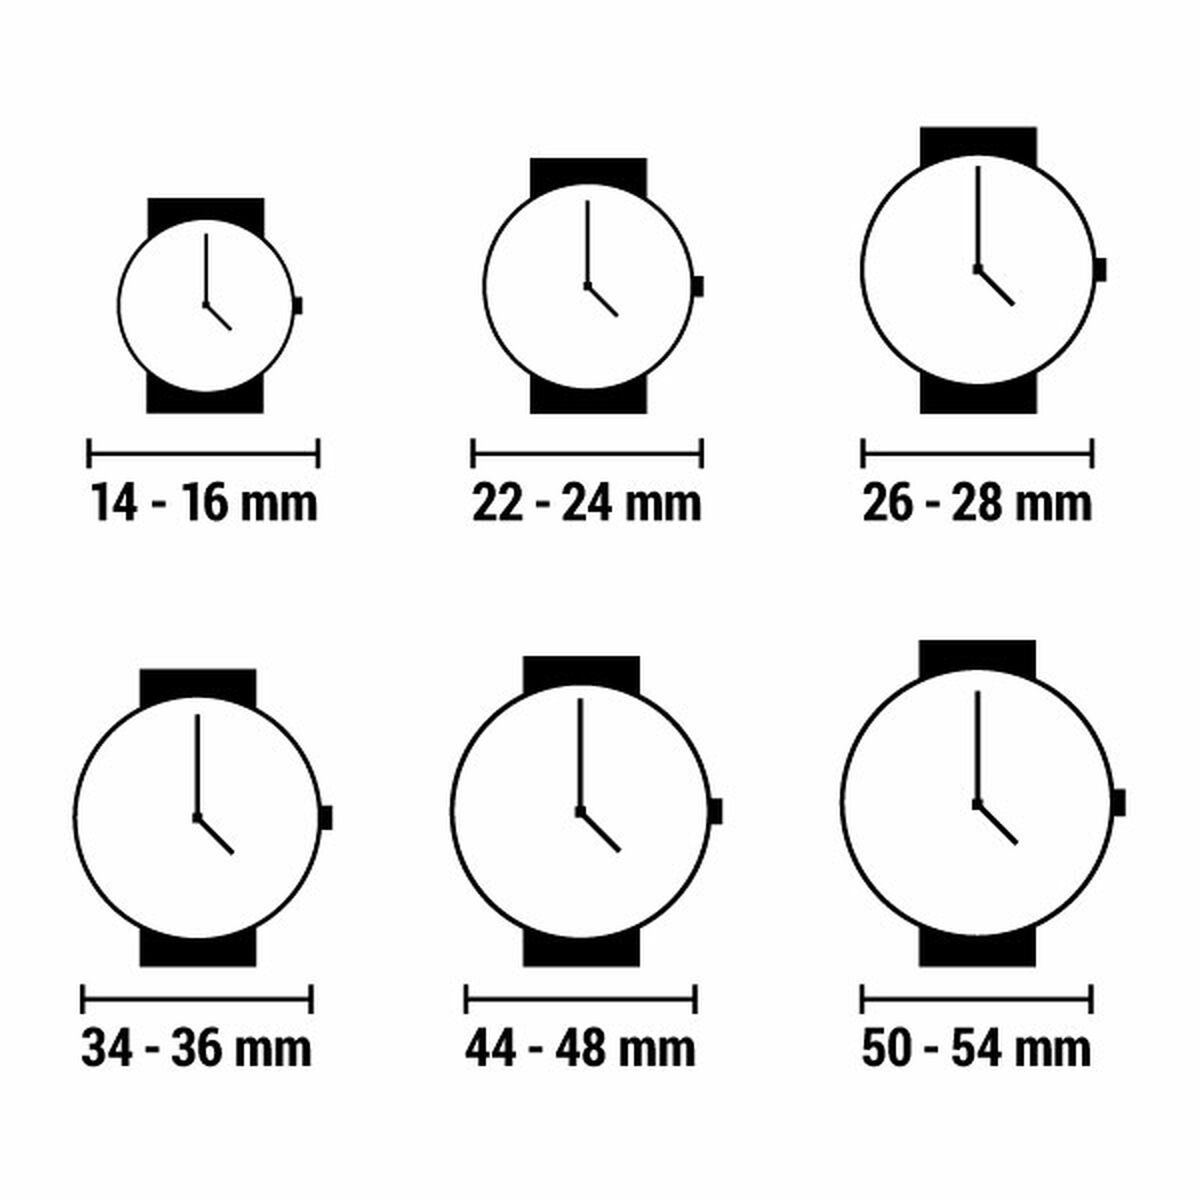 Horloge Dames Frederique Constant FC-303N4NH6B